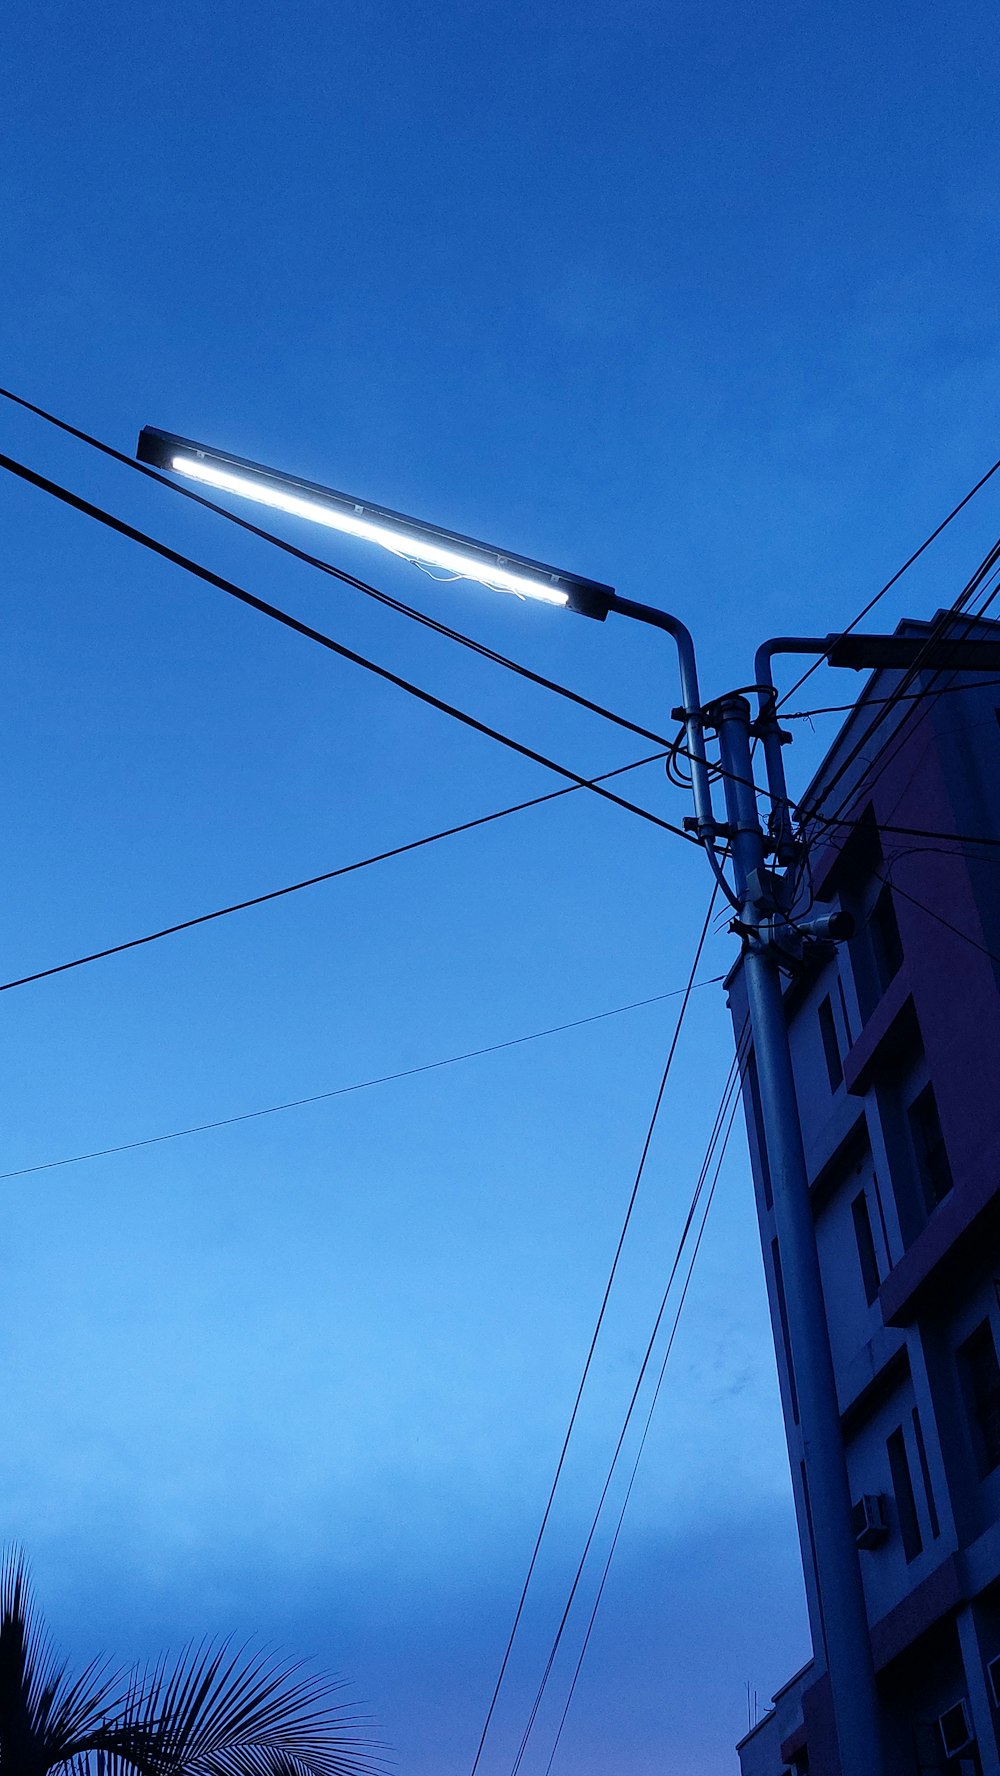 a street light on a pole